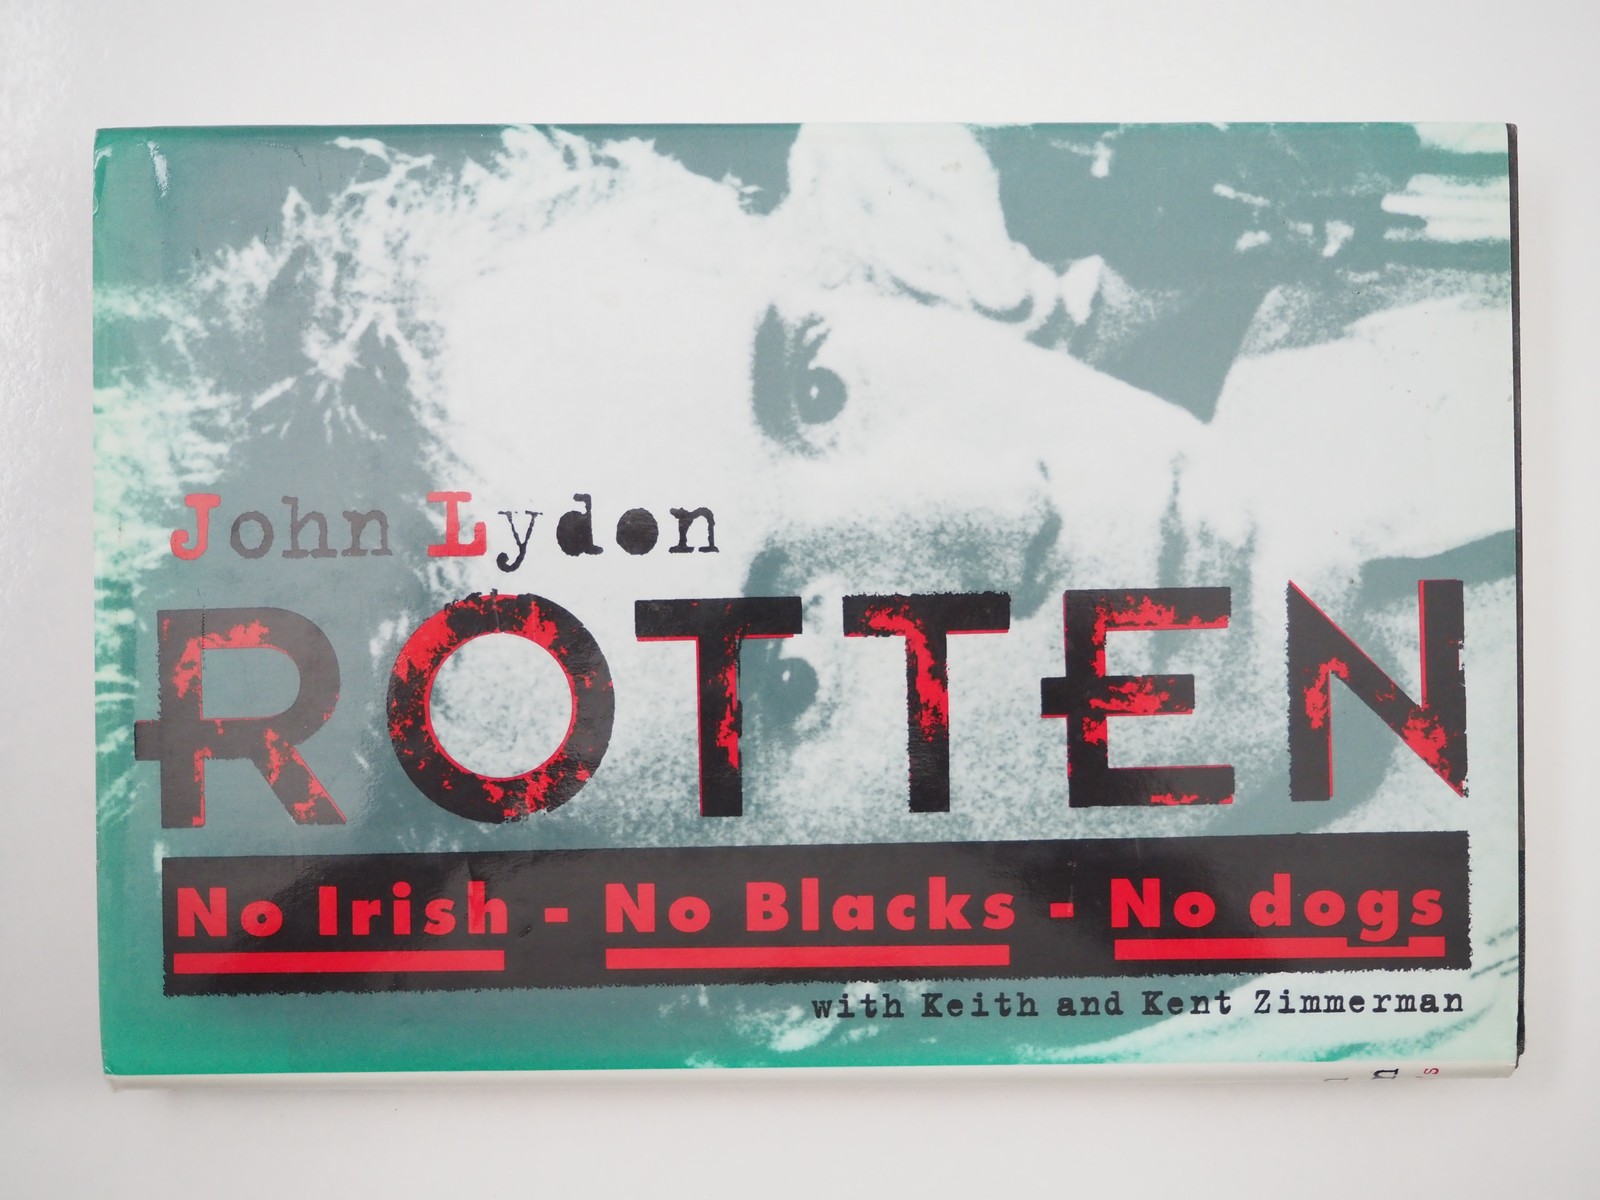 Rotten: No Irish, No Blacks, No Dogs by John Lydon